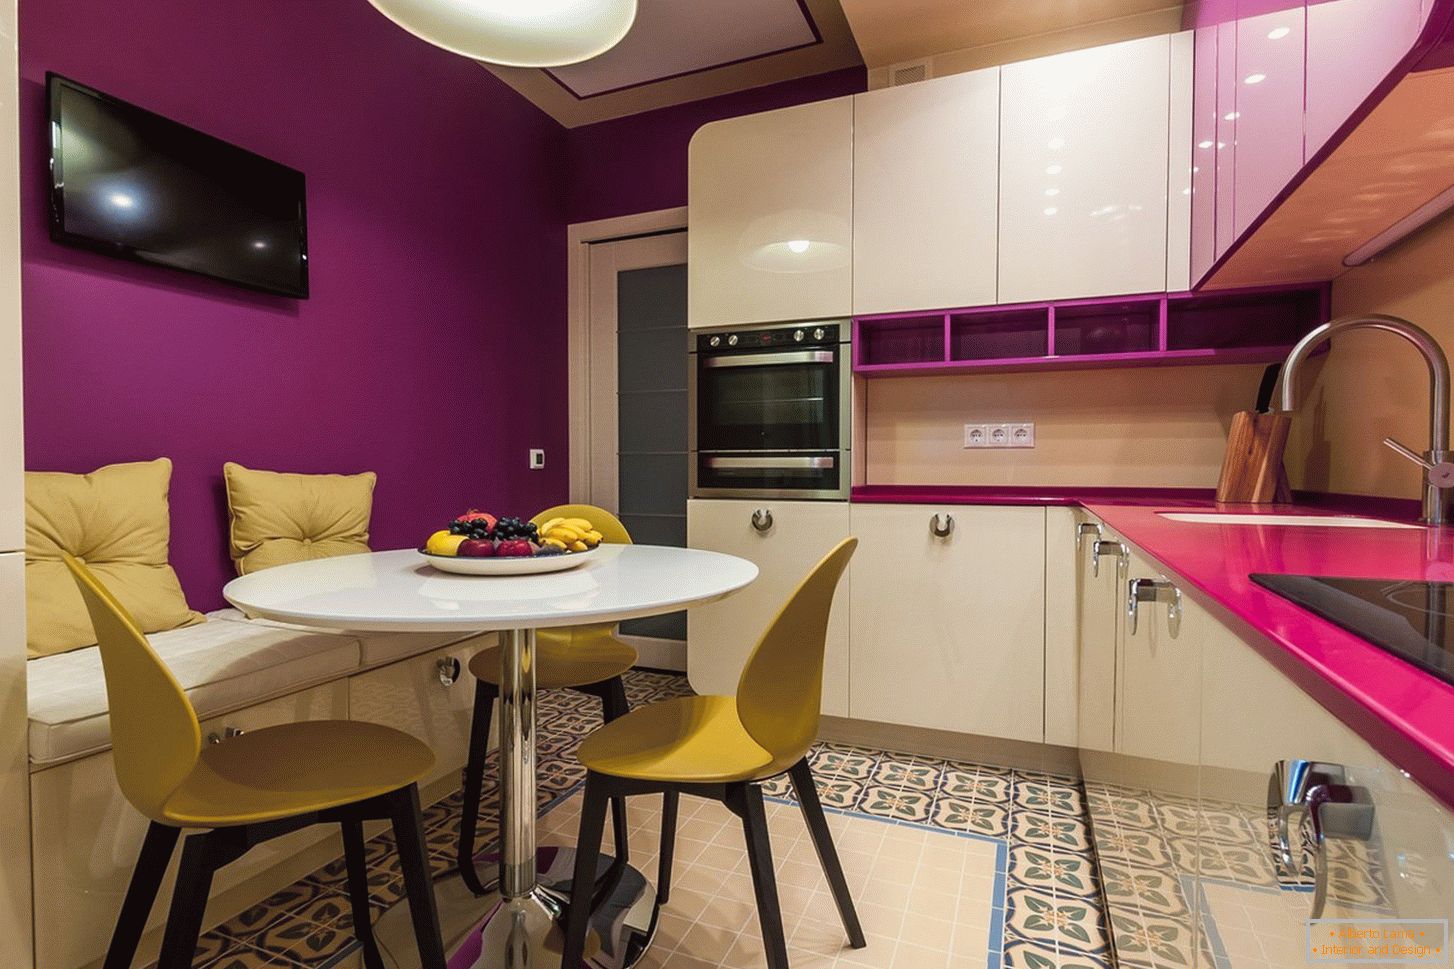 Purple walls in the kitchen